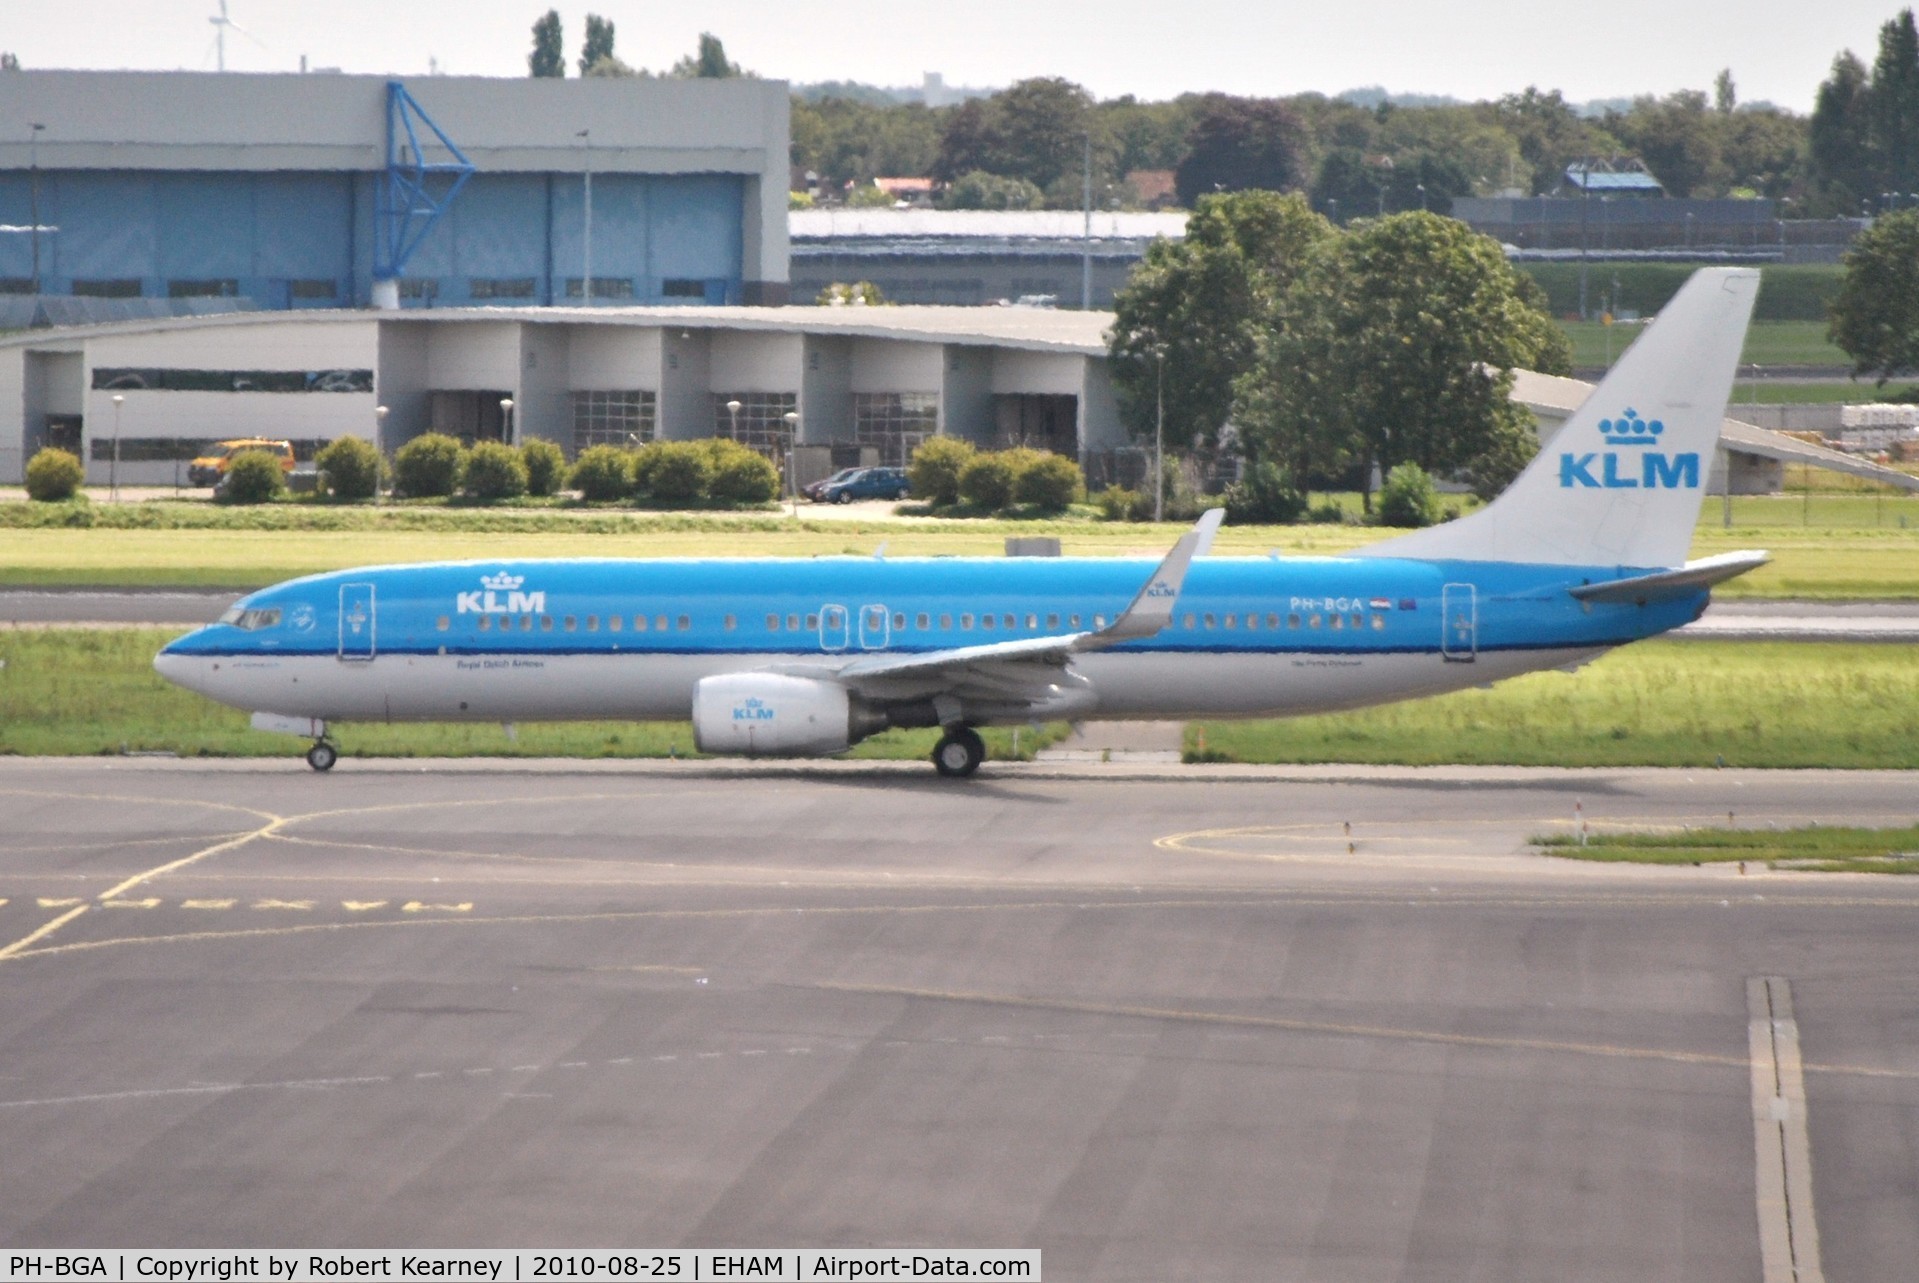 PH-BGA, 2008 Boeing 737-8K2 C/N 37593, KLM taxiing for take-off